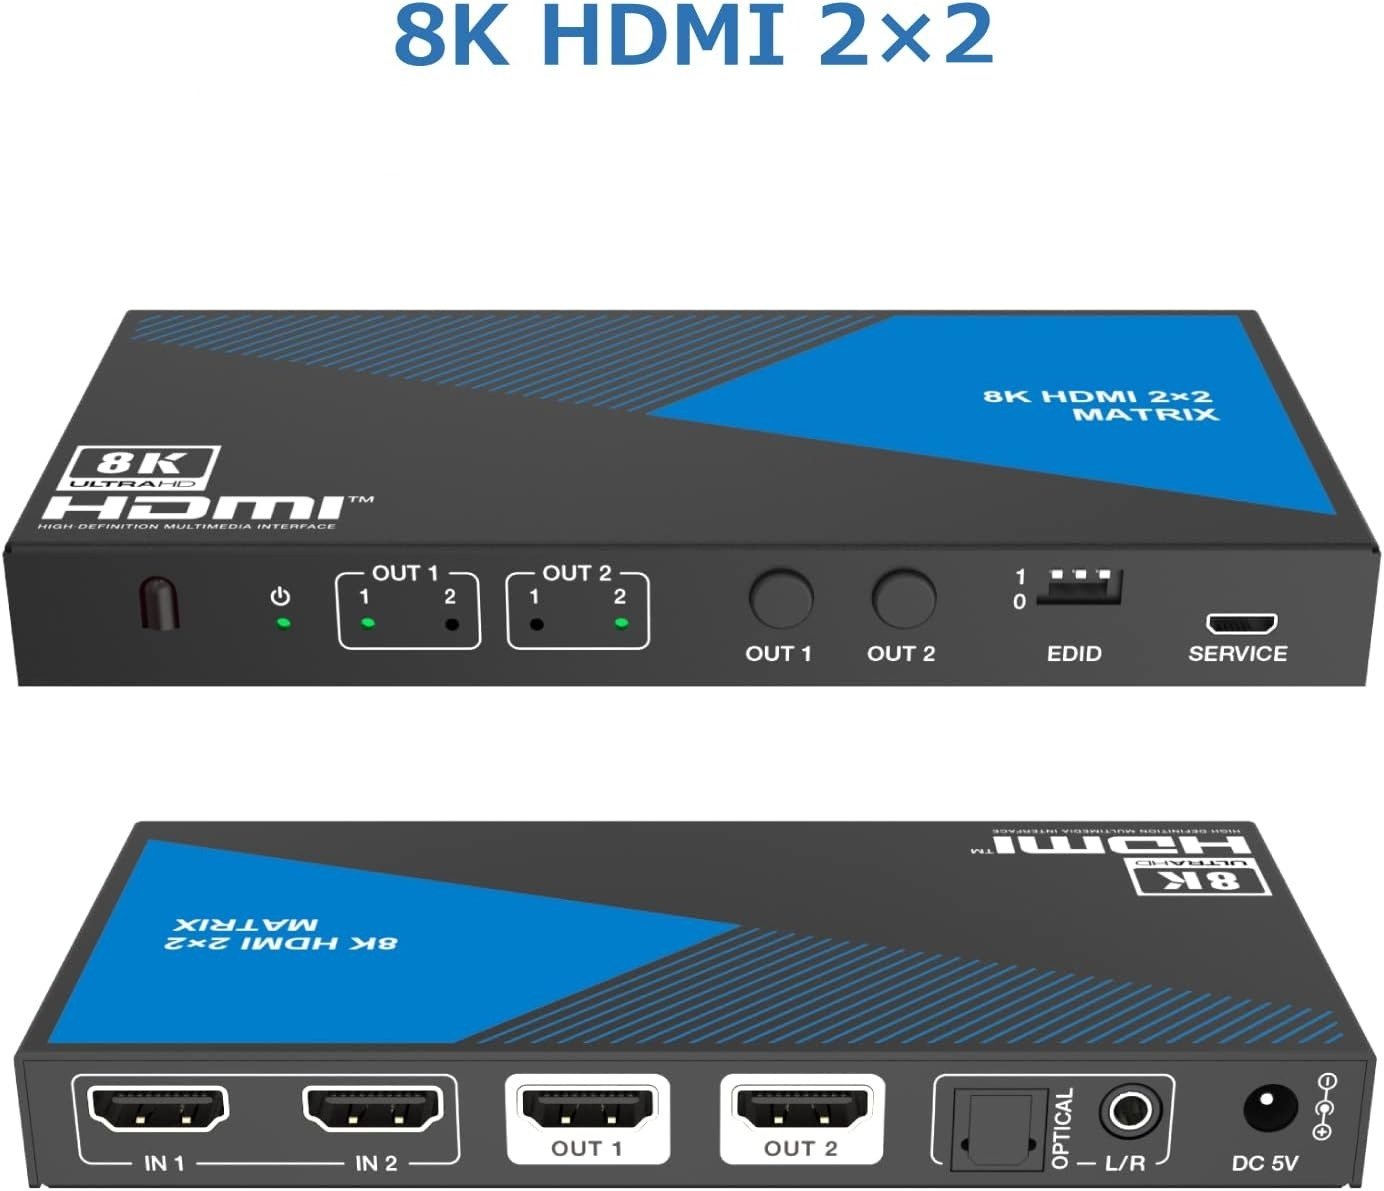 NÖRDIC 8K HDMI 2.1 matrisebryter 2x2 med lyduttrekk Toslink & Stereo EDID CEC, Dolby Atmos, Digital Plus, DTS-EX